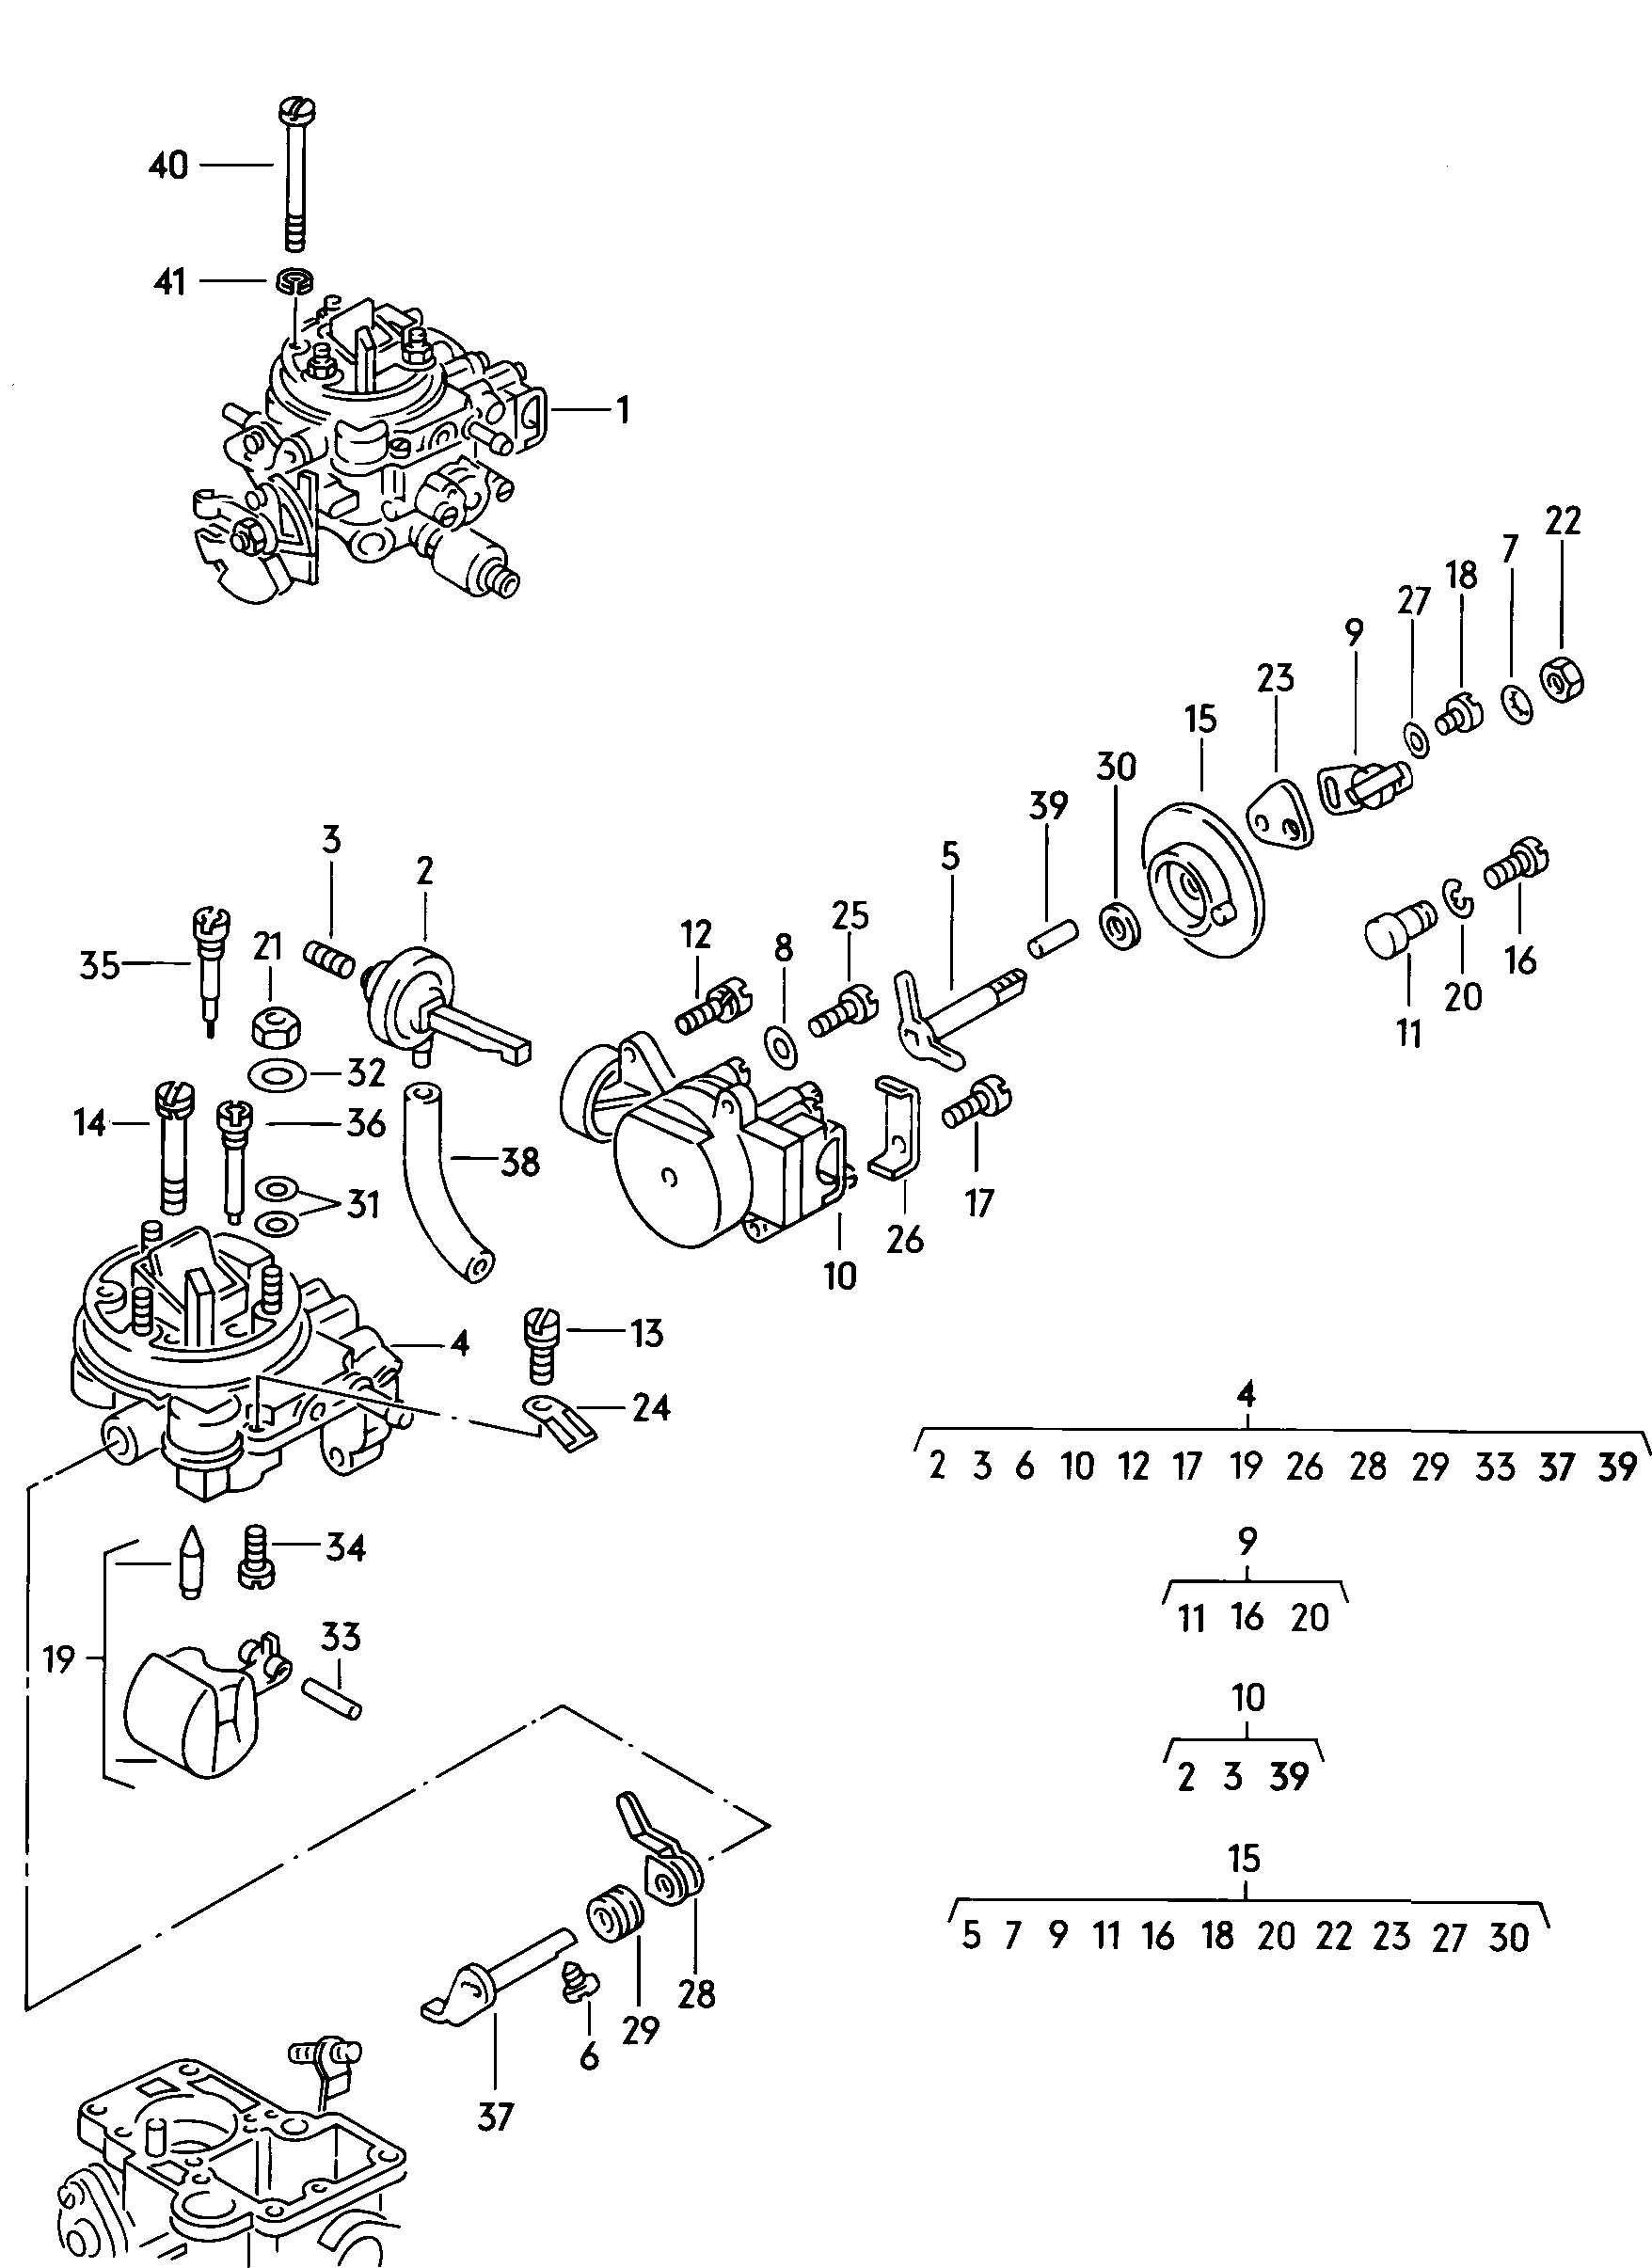 bovenstuk carburateurhuis - Mod.181 / Iltis(ILT)  